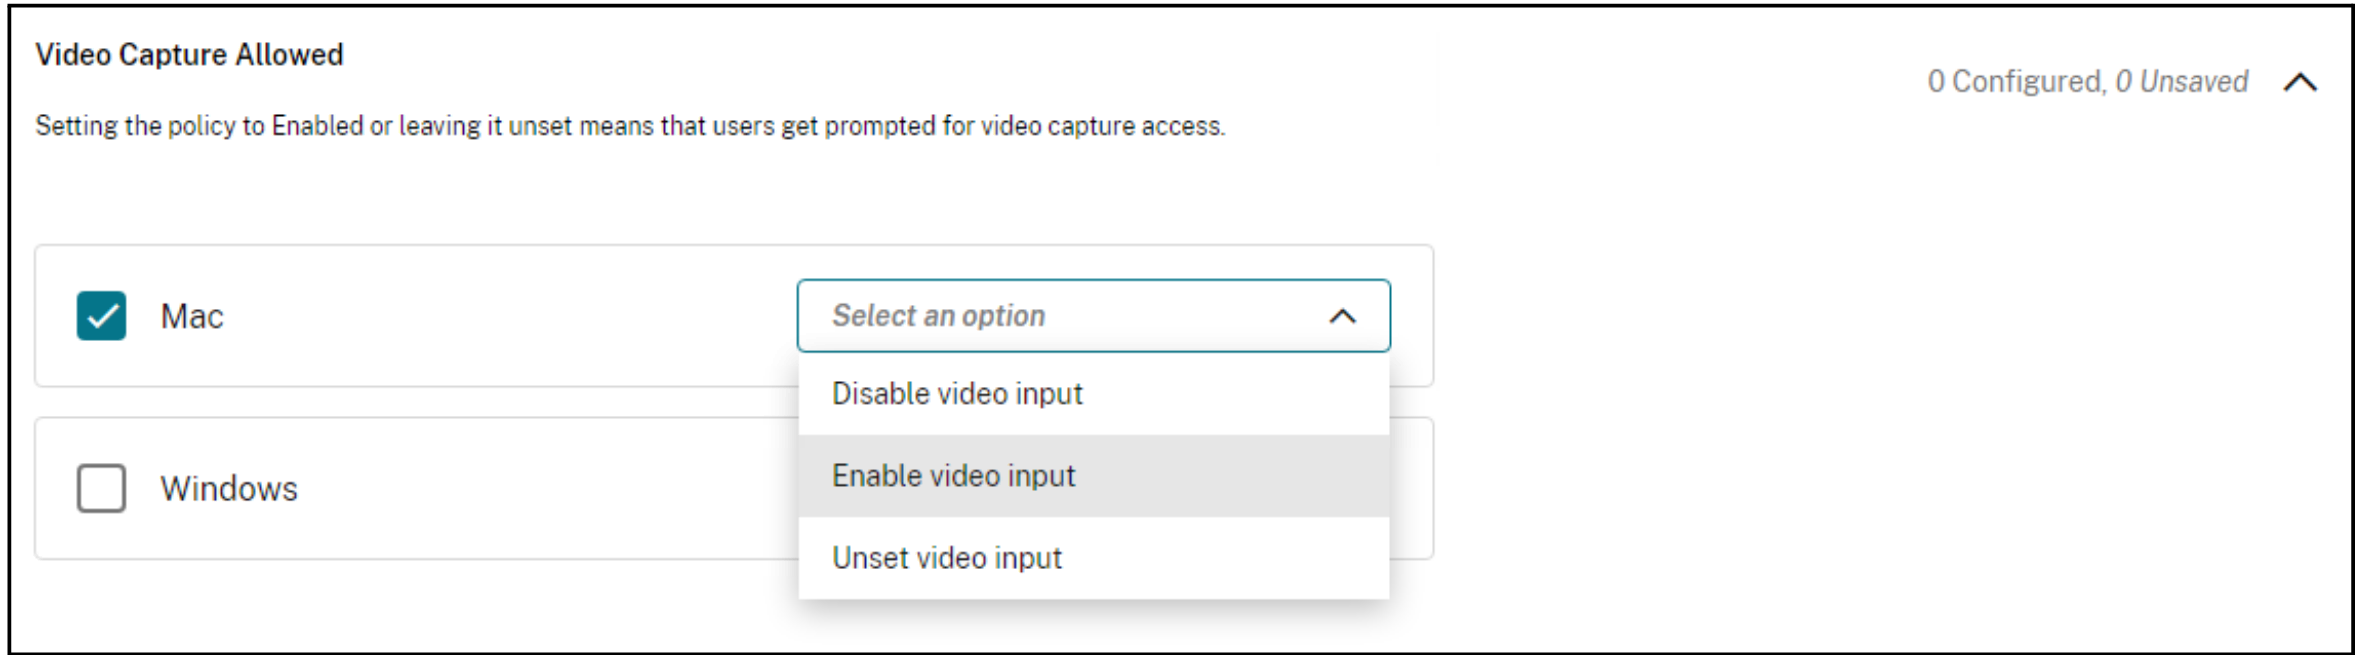 Video capture allowed